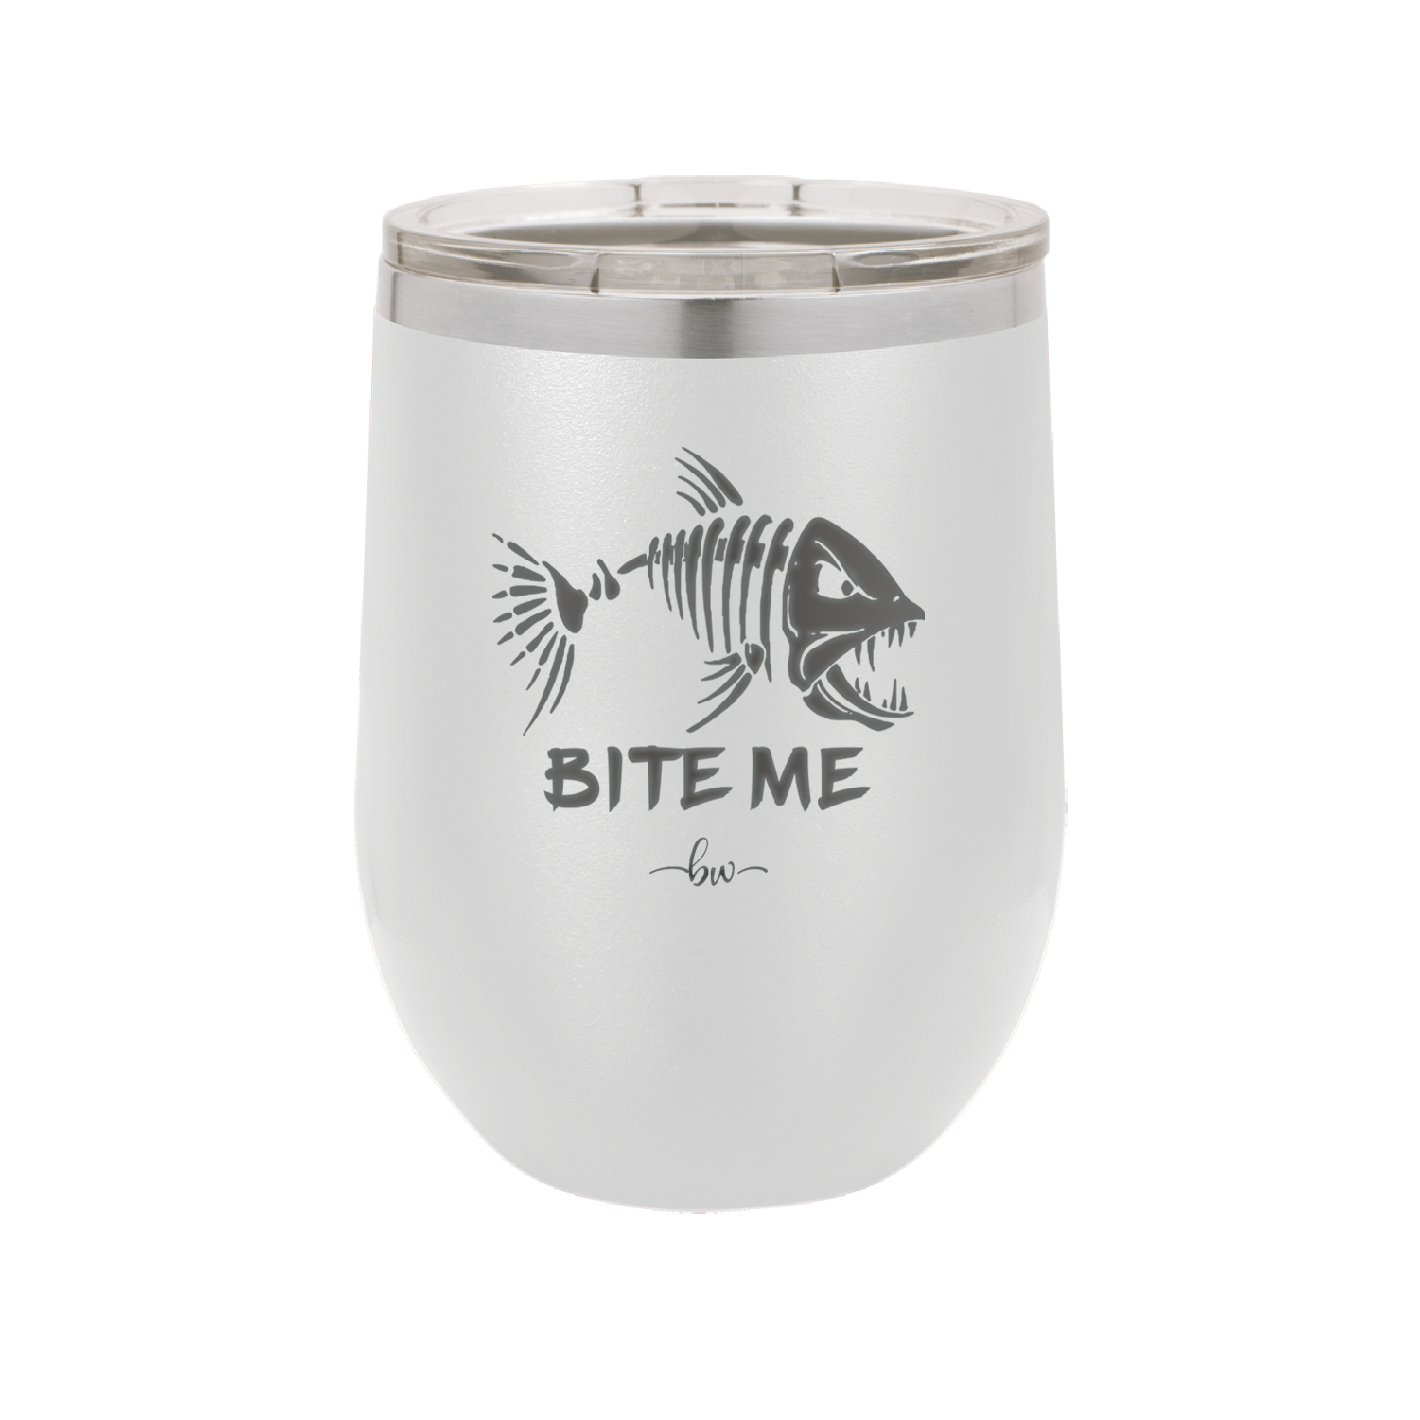 Bite Me Fish Bone - Laser Engraved Stainless Steel Drinkware - 1299 -